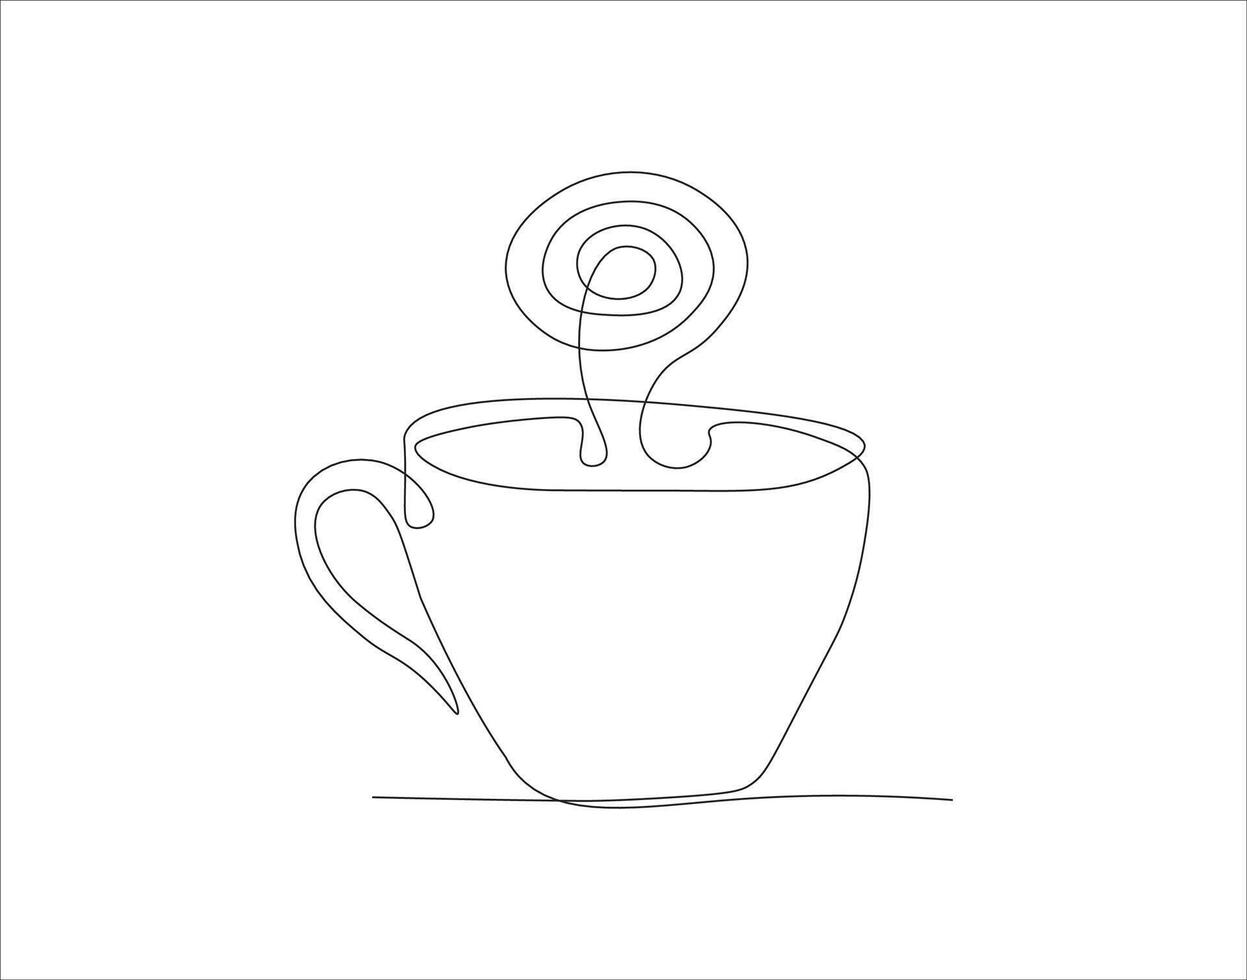 continuo línea dibujo de taza de café. uno línea de café. un taza de café continuo línea Arte. editable describir. vector